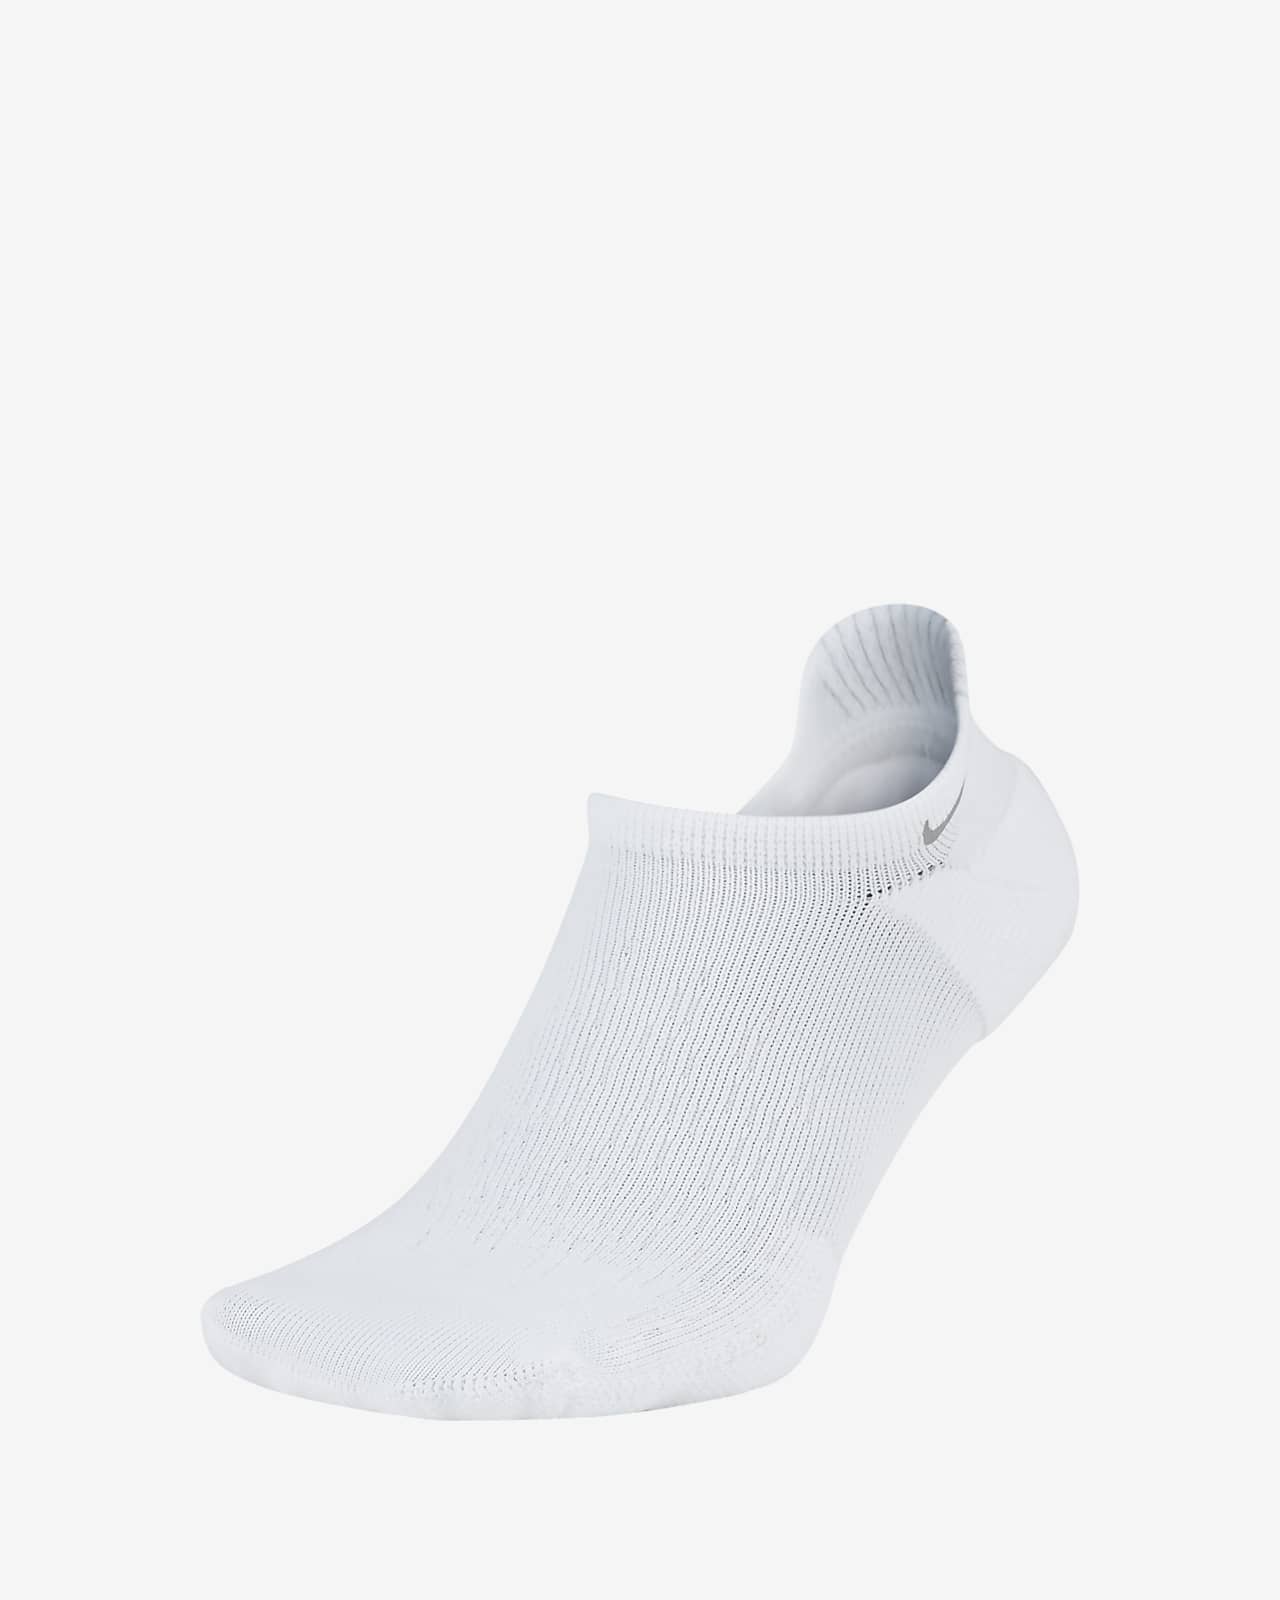 most cushioned running socks